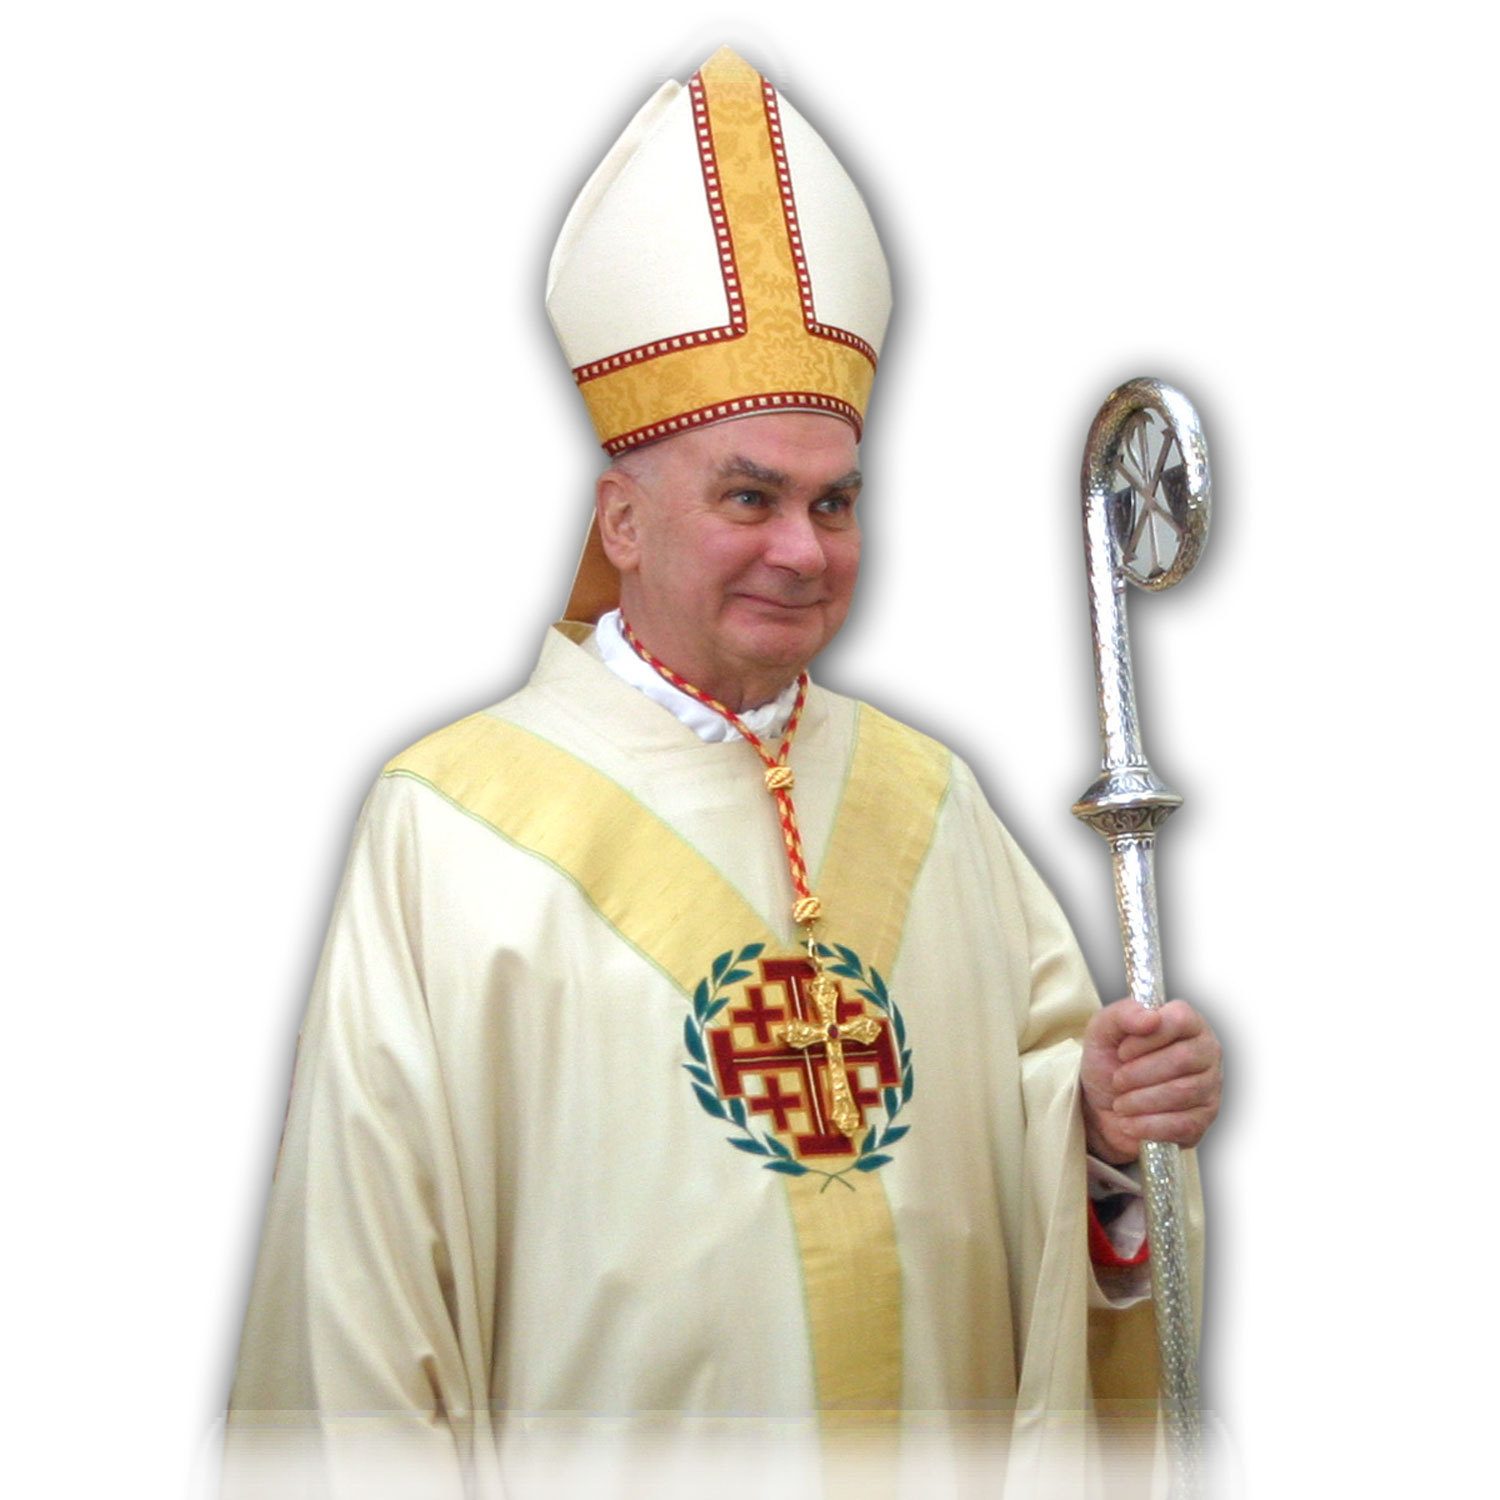 A loving remembrance of John Cardinal Foley Catholic Philly